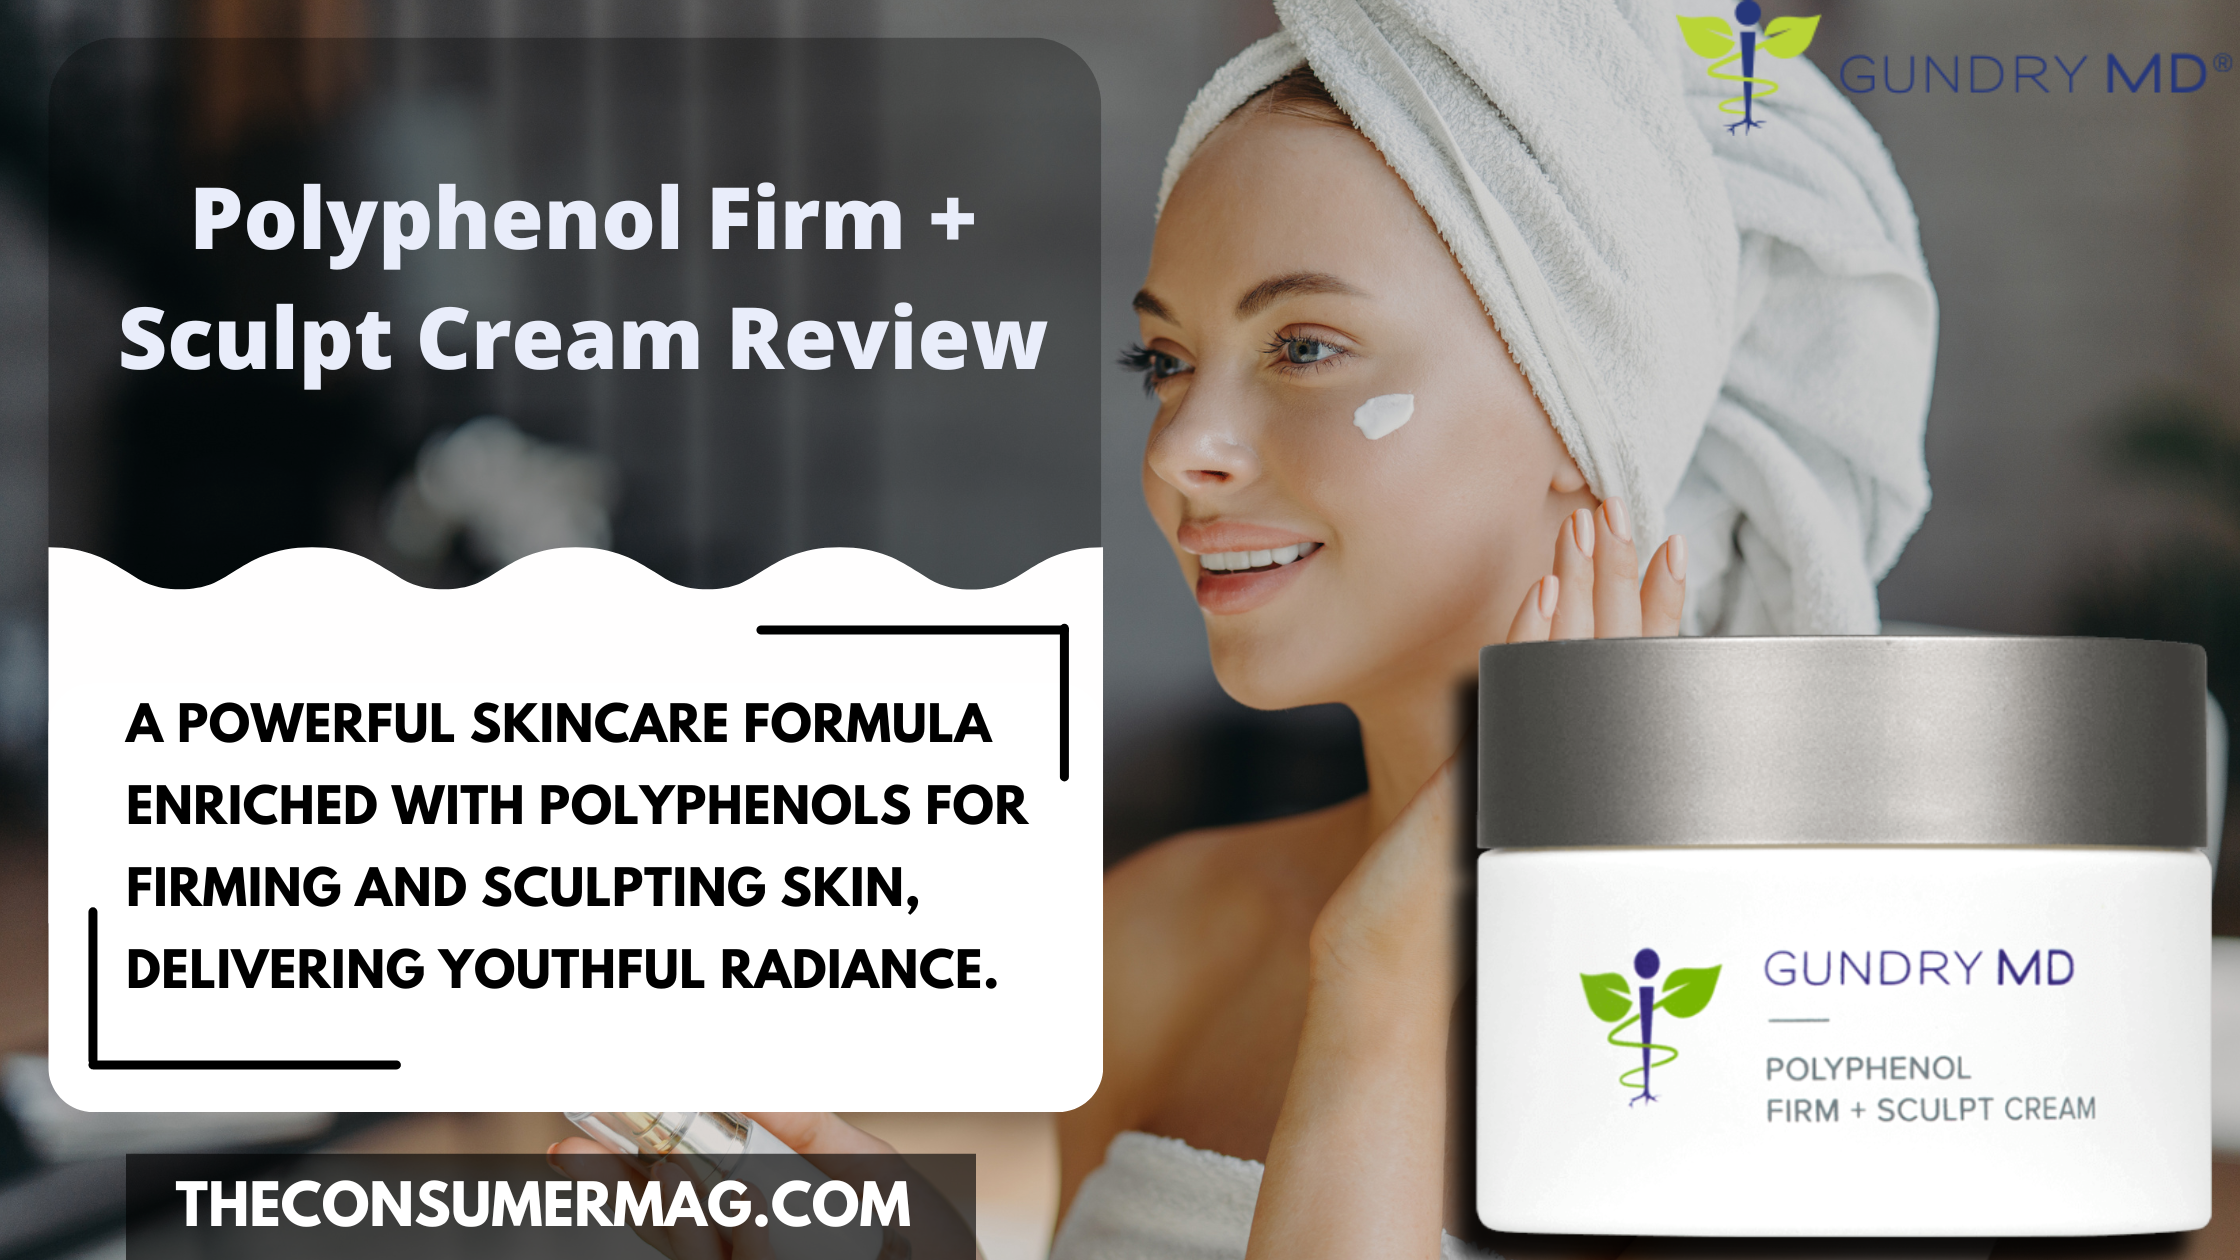 Polyphenol Firm + Sculpt Cream Featured Image